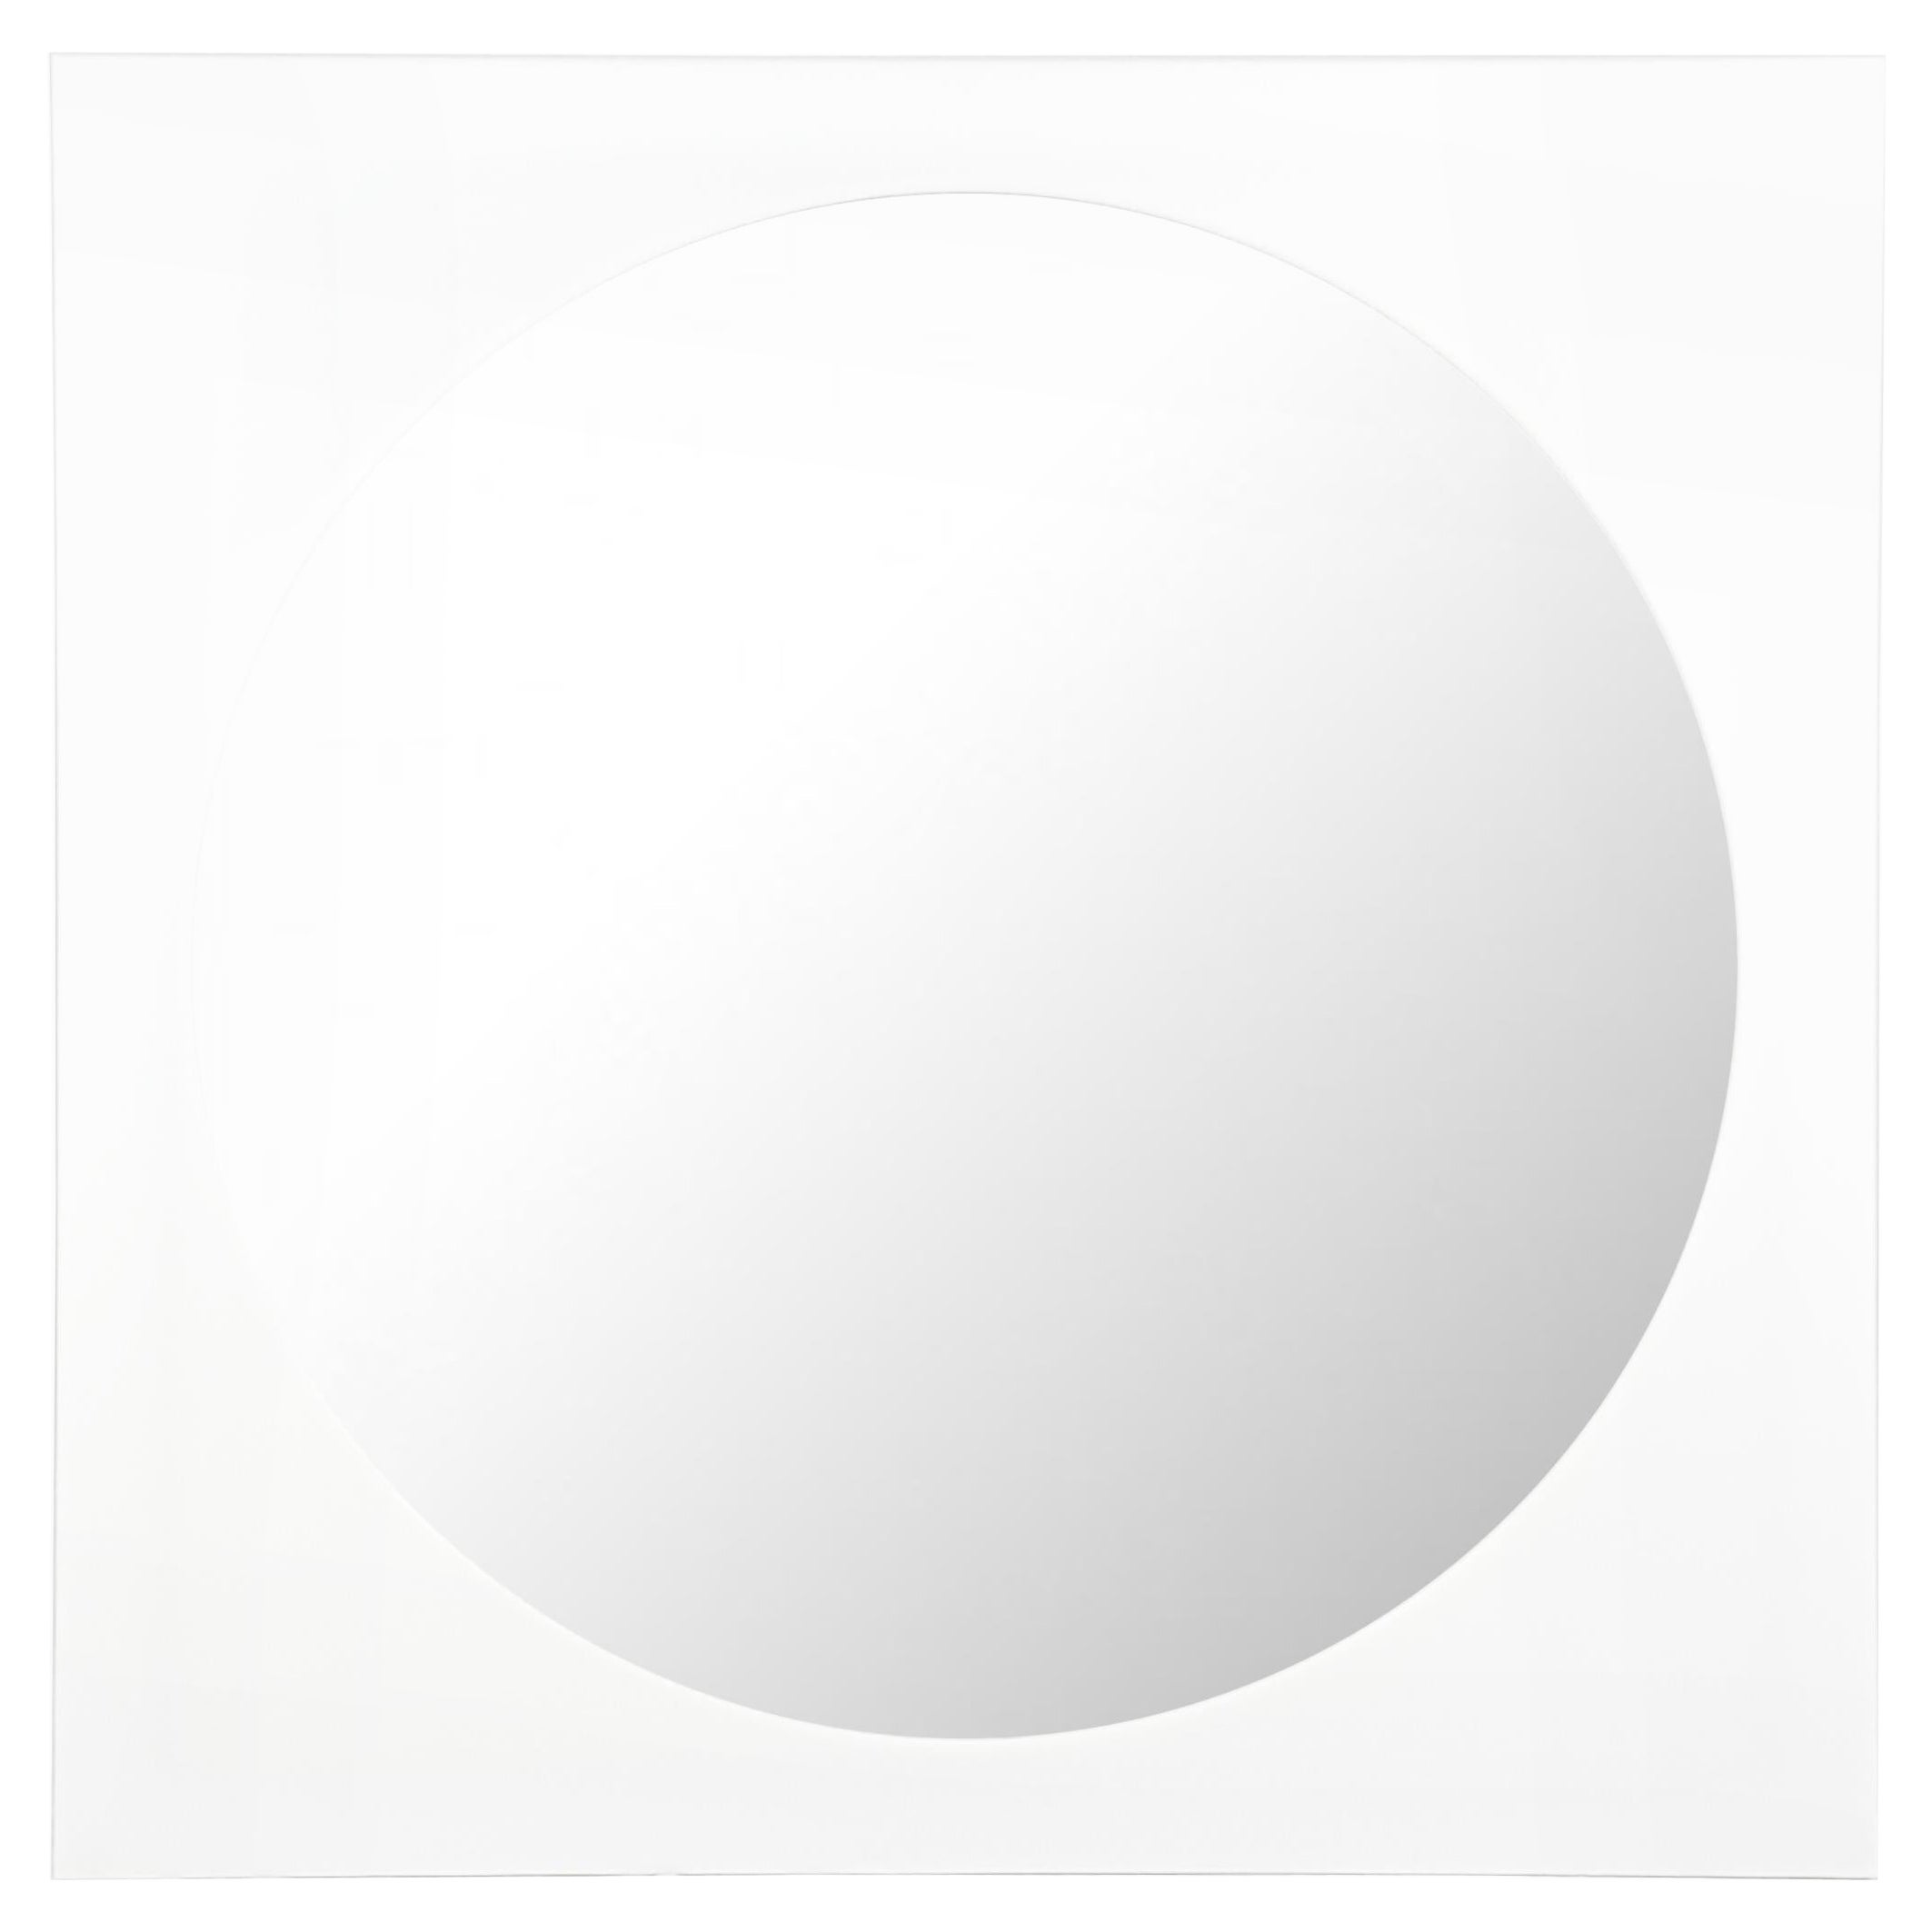 Miroir carré en méthacrylate blanc 4724/5 de G. Stoppino pour Kartell